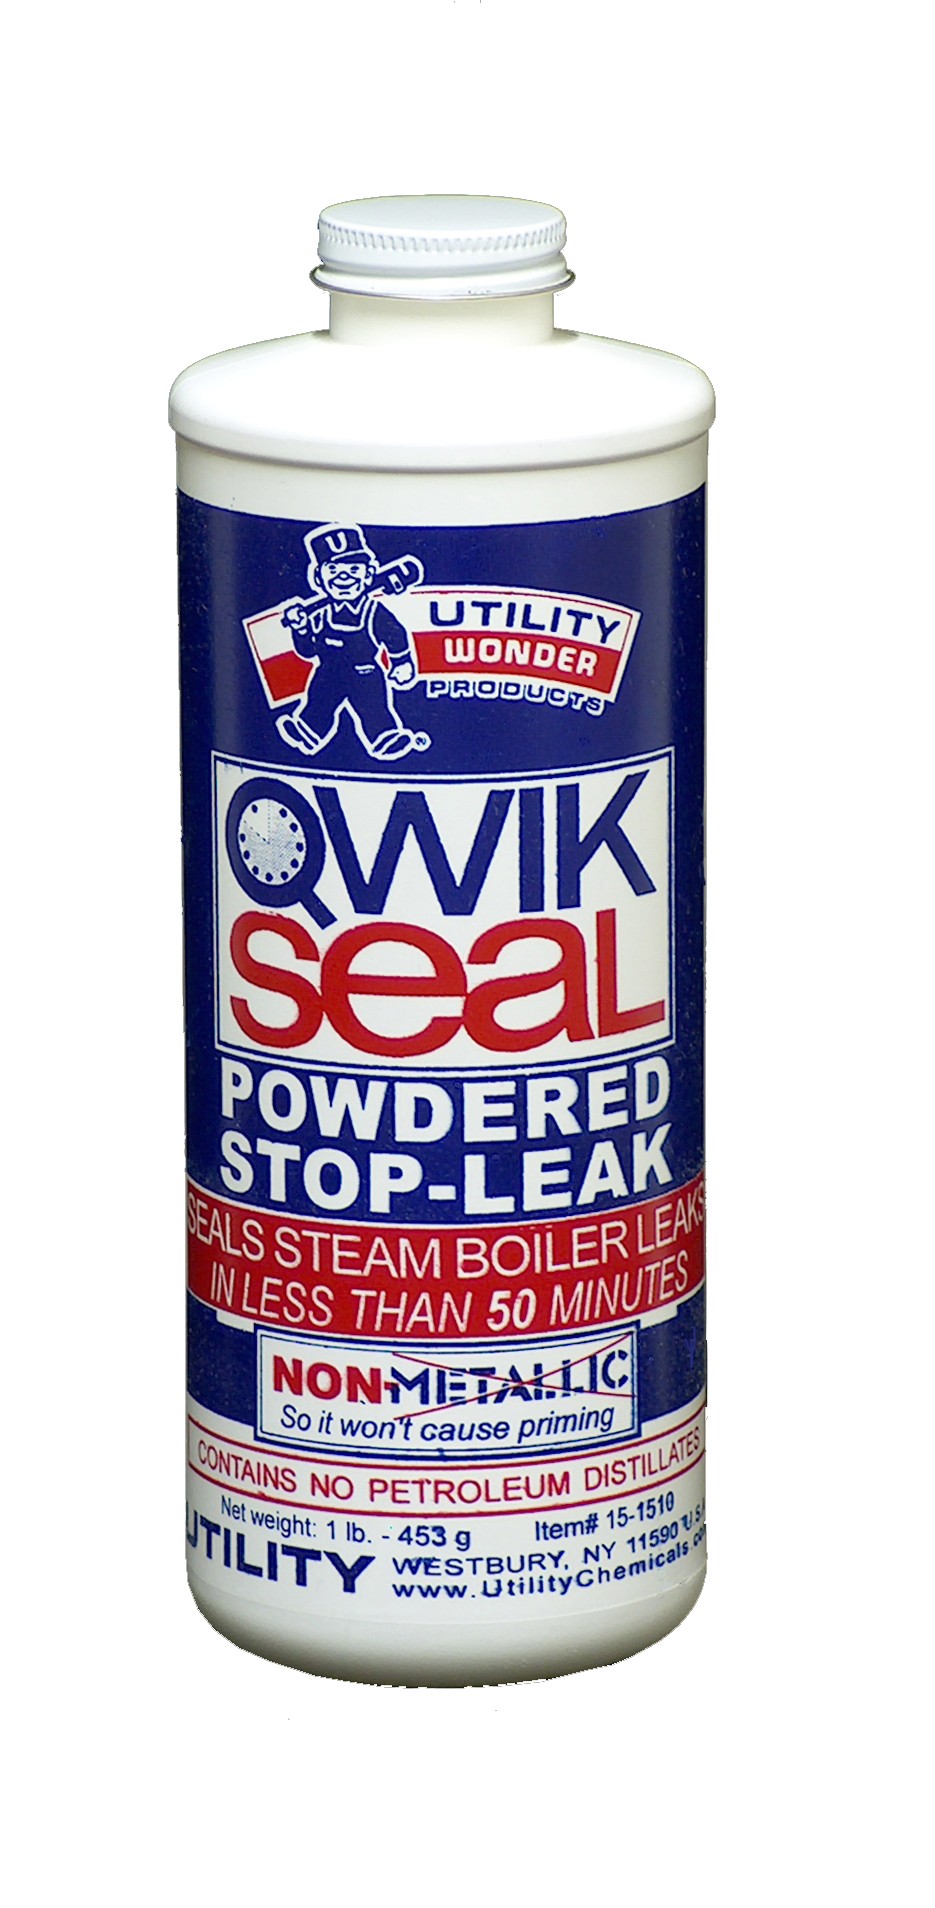 QWIK SEAL POWDERED STOP-LEAK